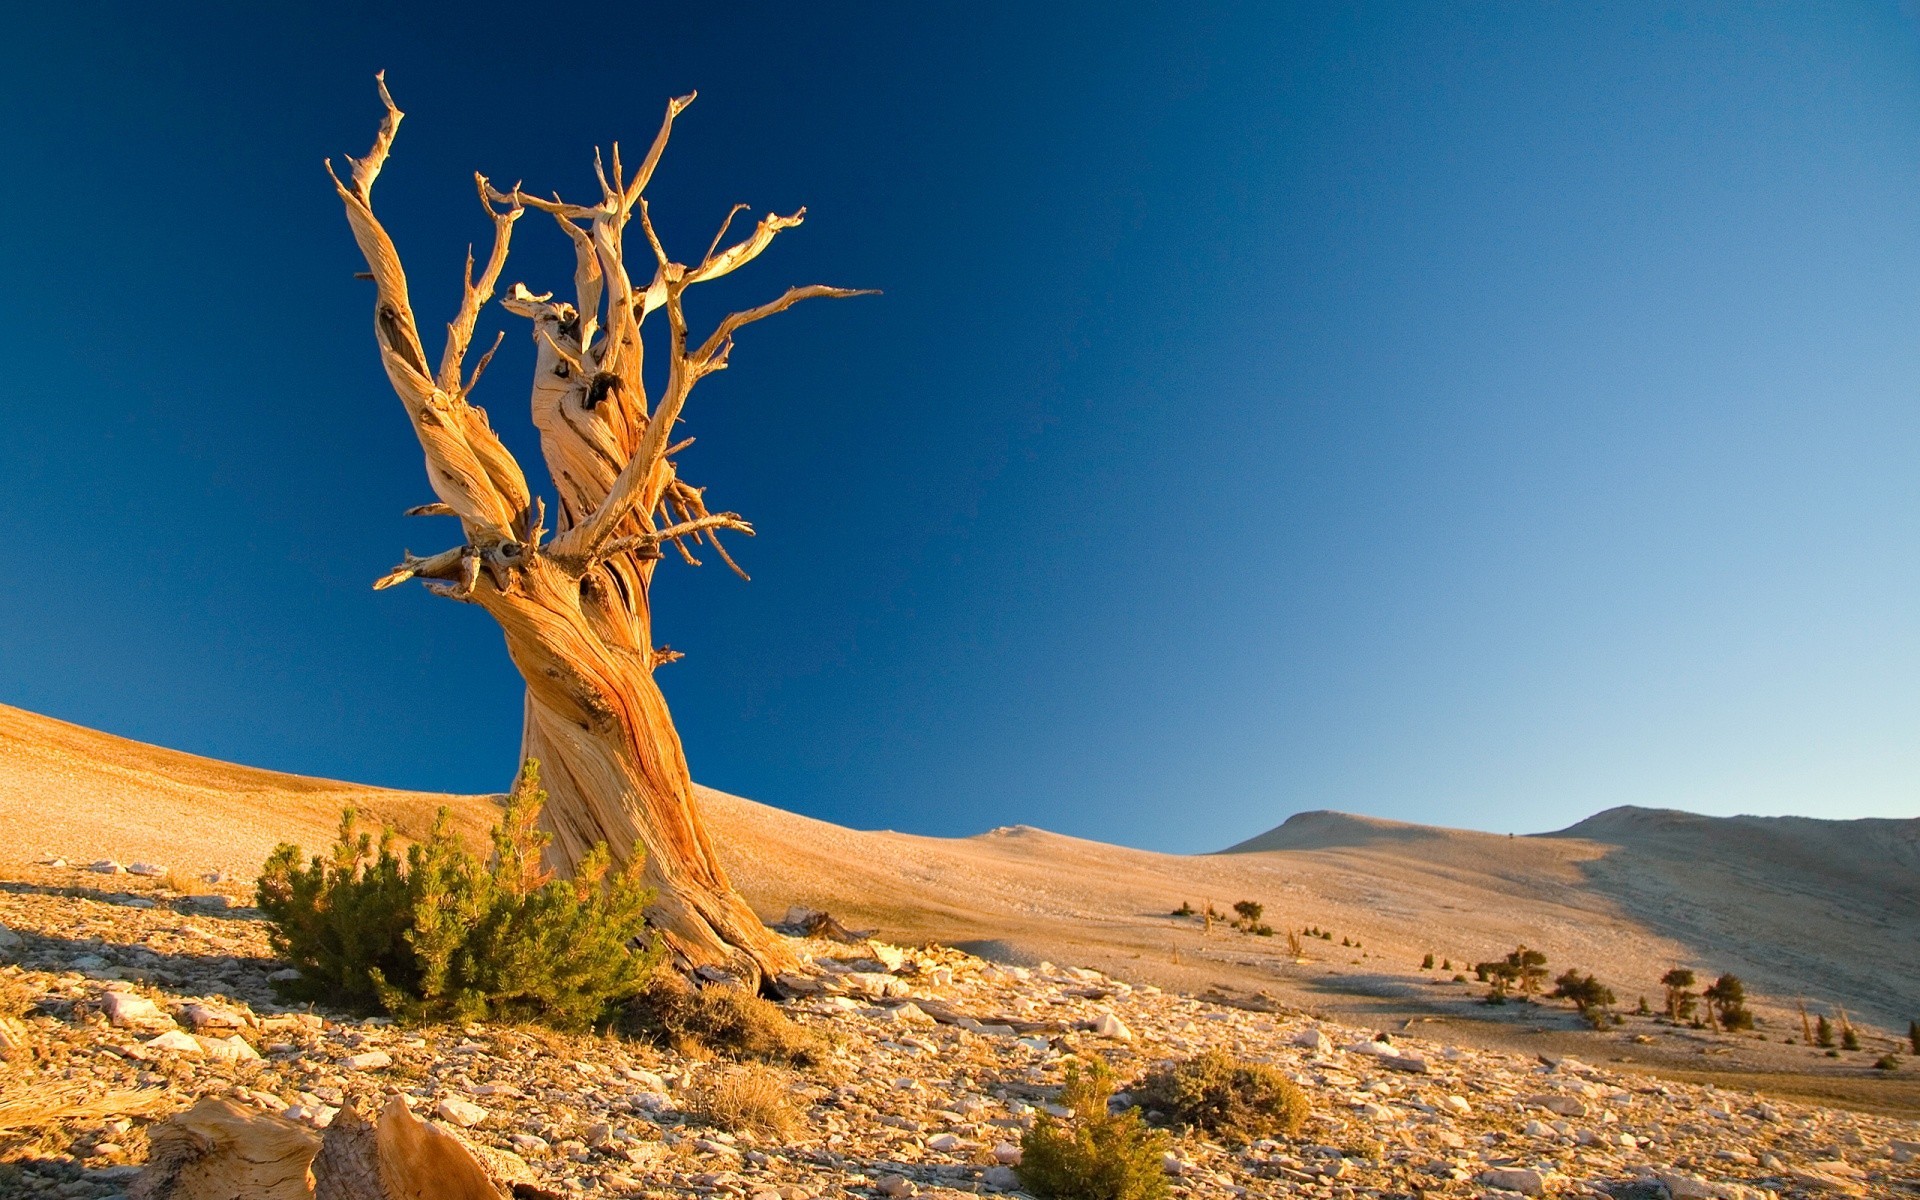 desert landscape sky travel outdoors nature mountain tree daylight scenic dry rock